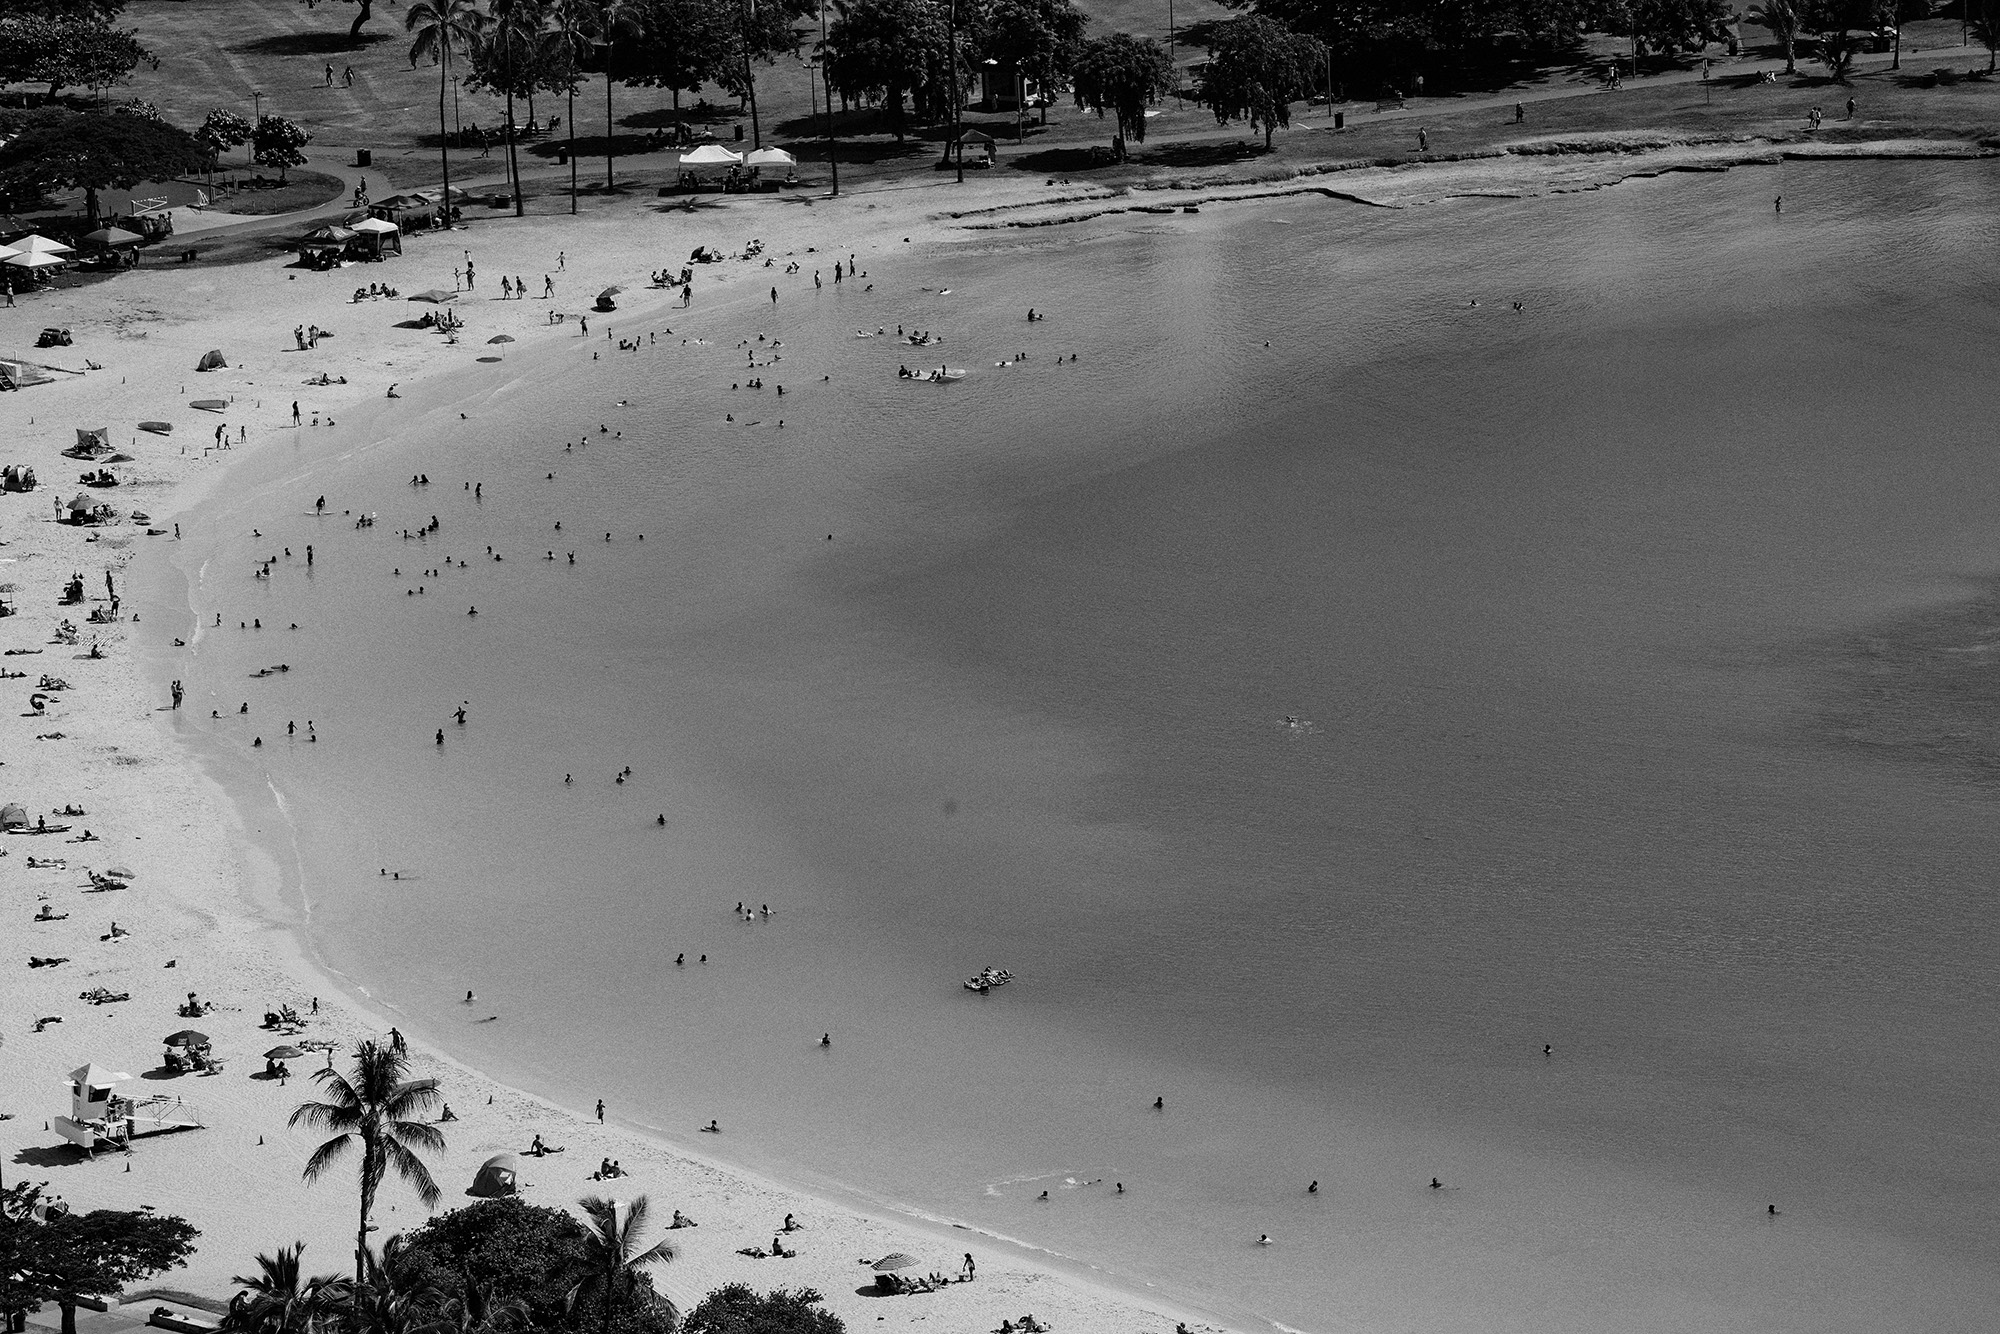 Aerial image of beachgoers at shoreline